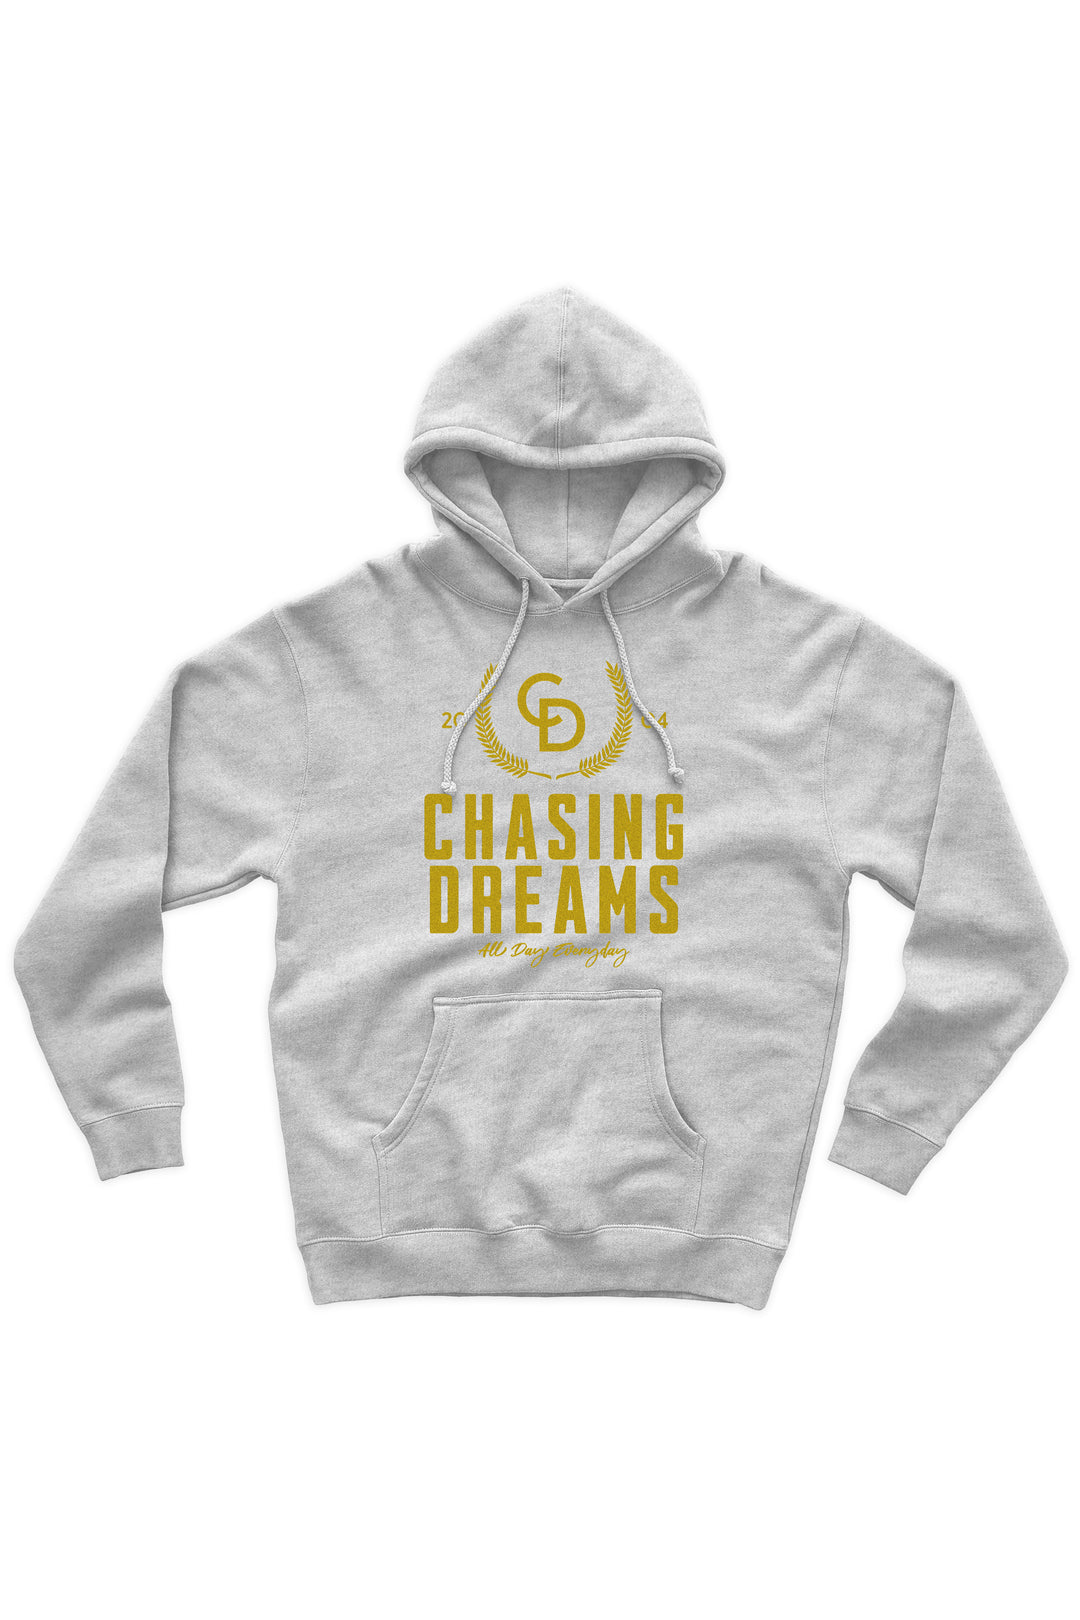 Chasing Dreams Hoodie (Gold Logo) - Zamage